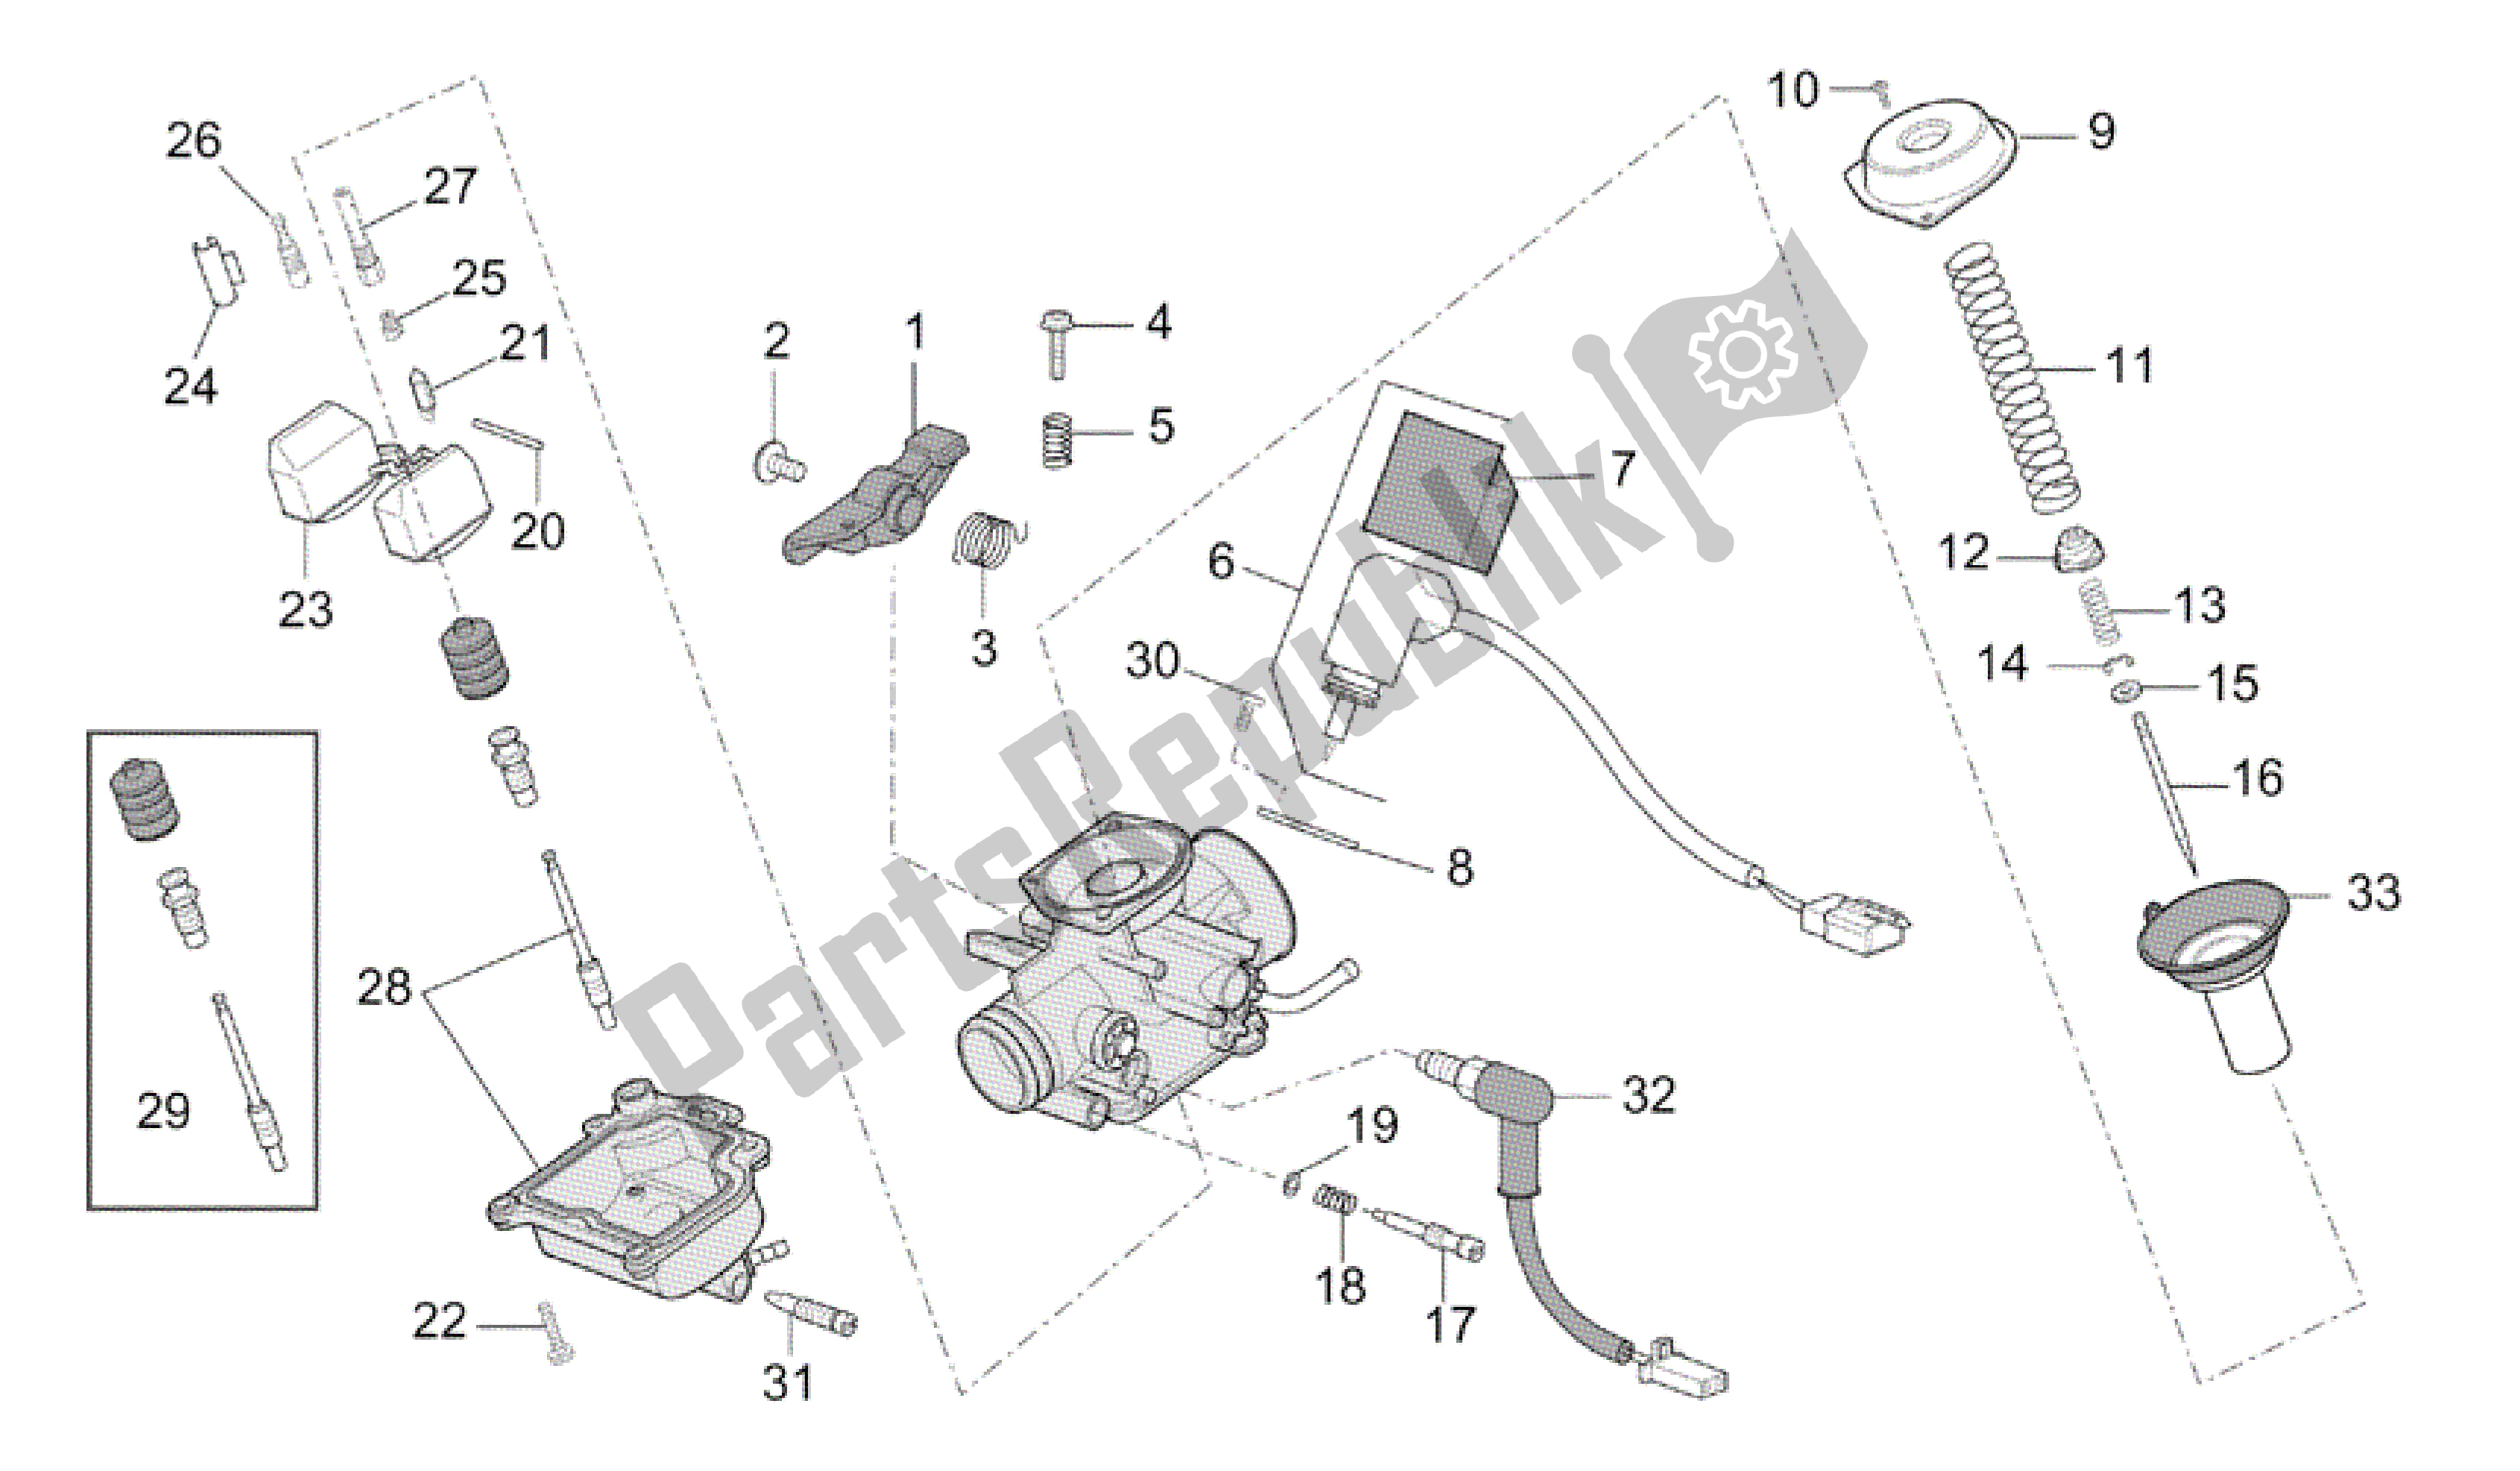 All parts for the Carburettor - Components of the Aprilia Mojito 125 2003 - 2007